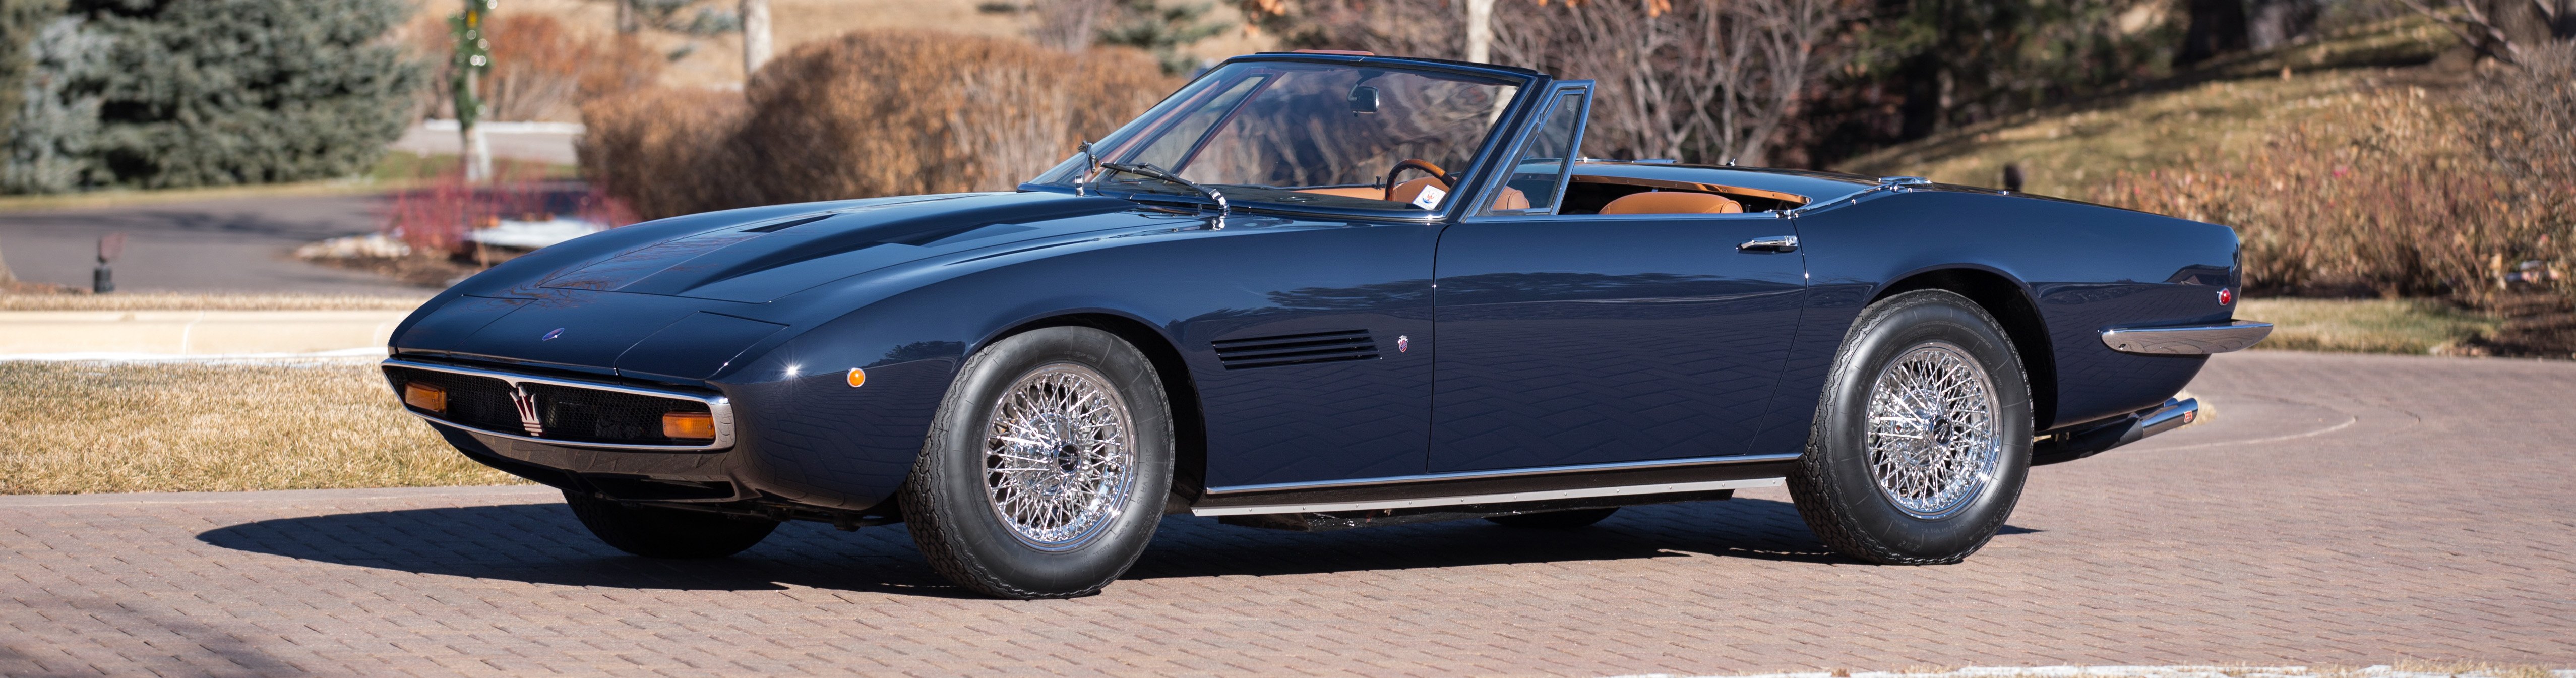 Farland Maserati restoration banner